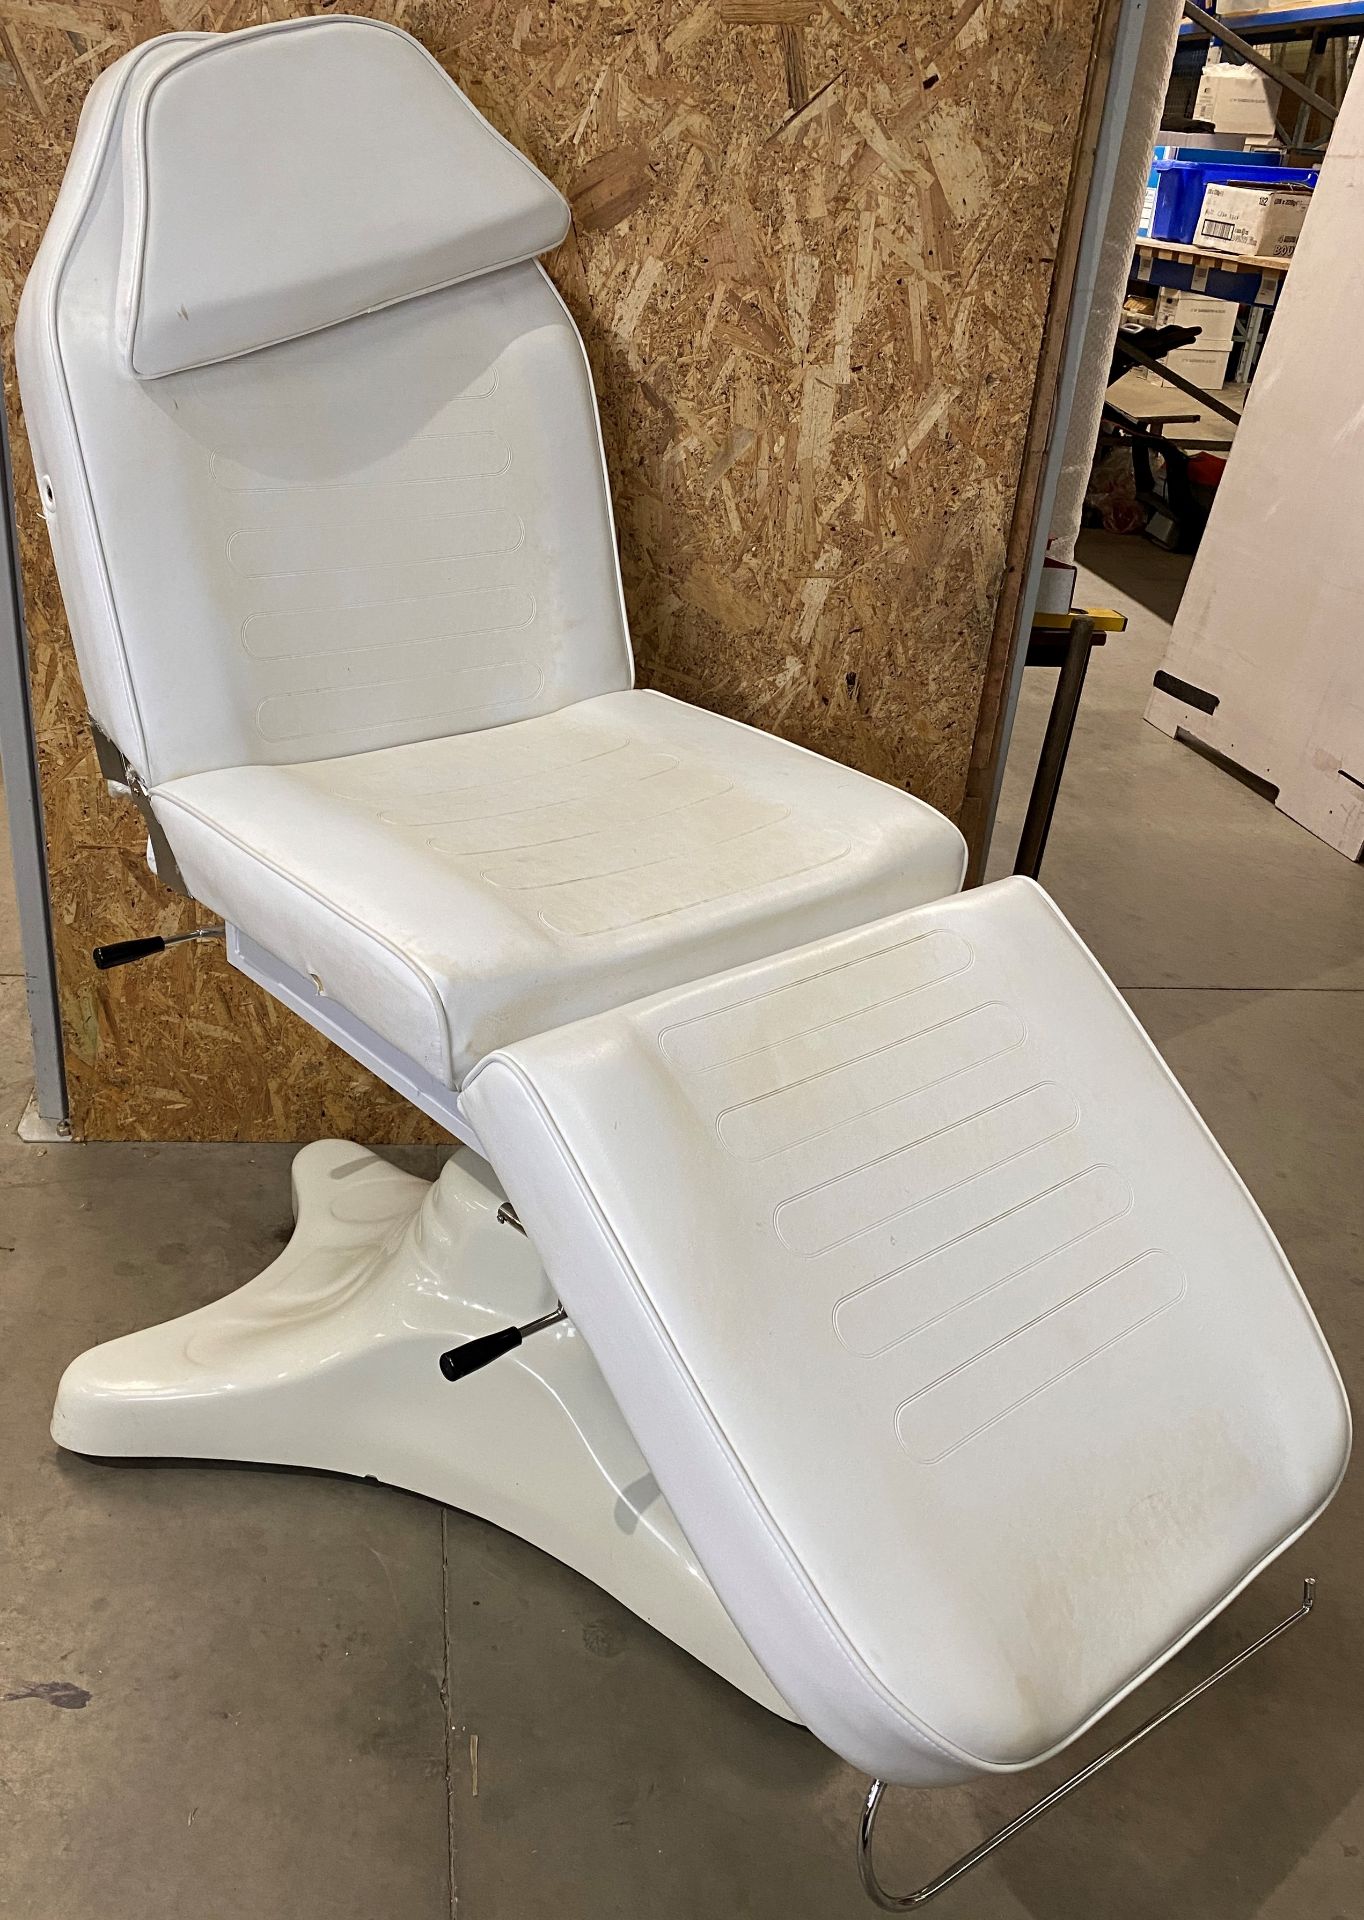 Physa Imperia Cosmetic Treatment Chair - 182cm x 66cm x 63cm